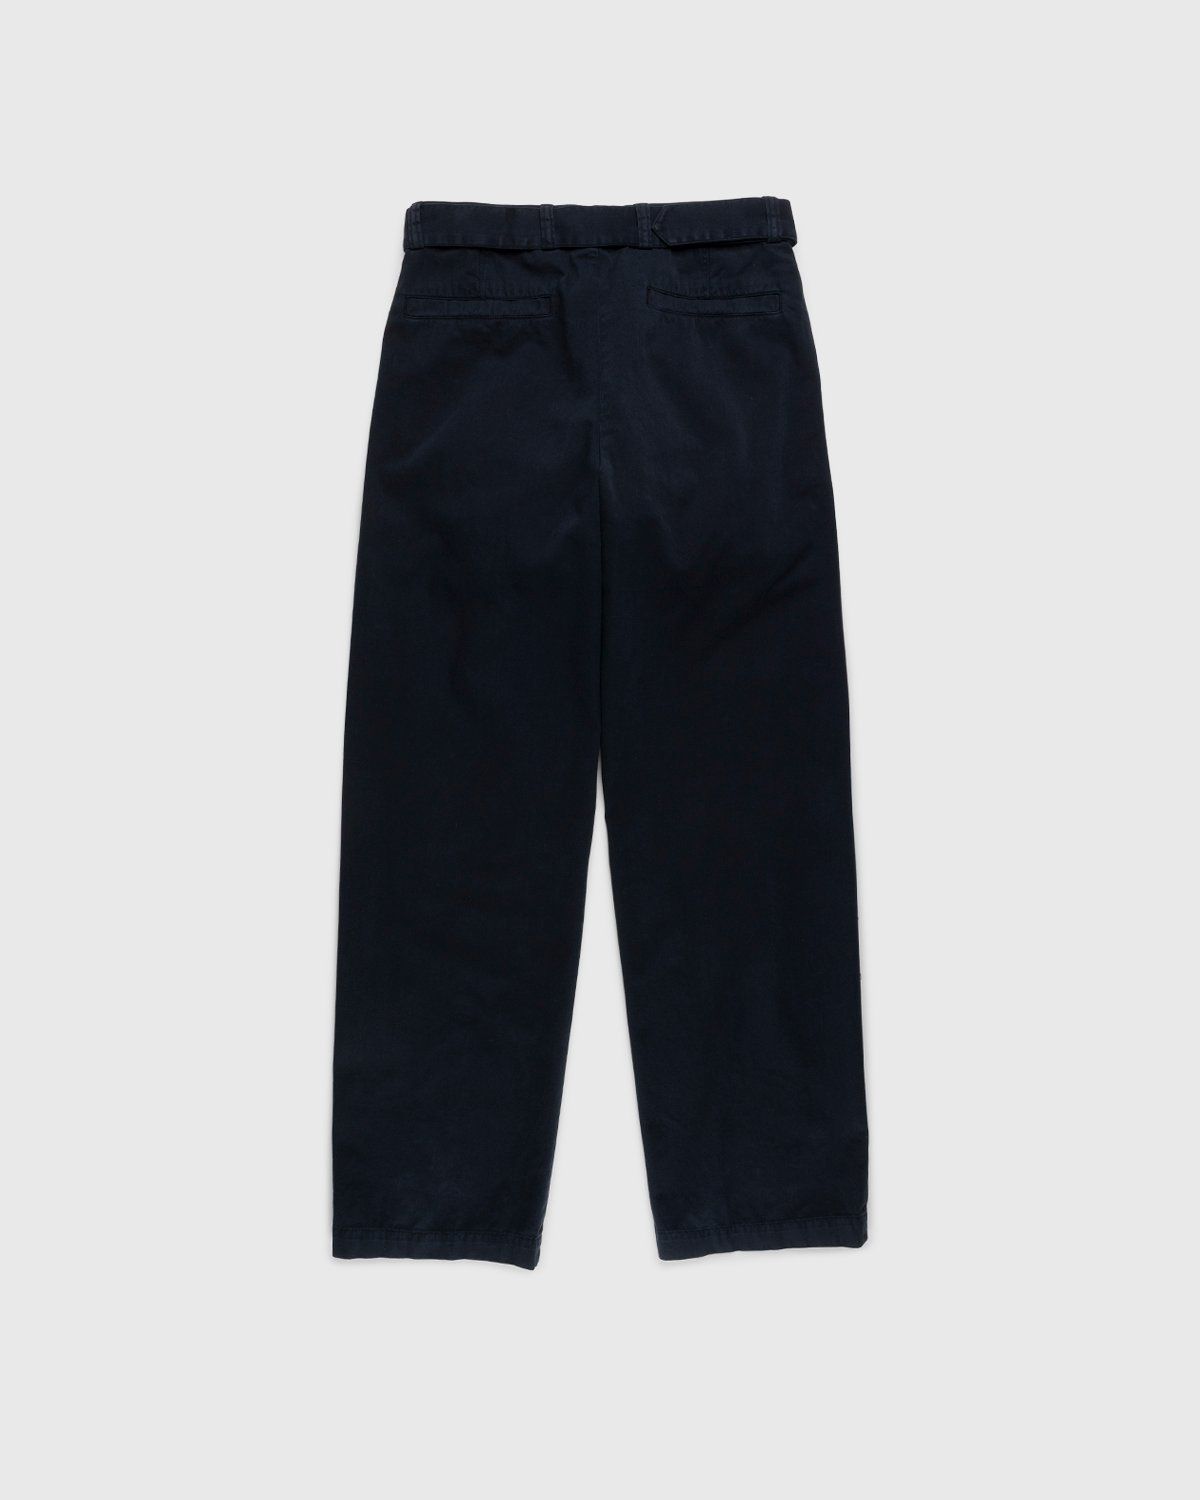 Dries van Noten – Penson Pants Navy - Trousers - Blue - Image 2